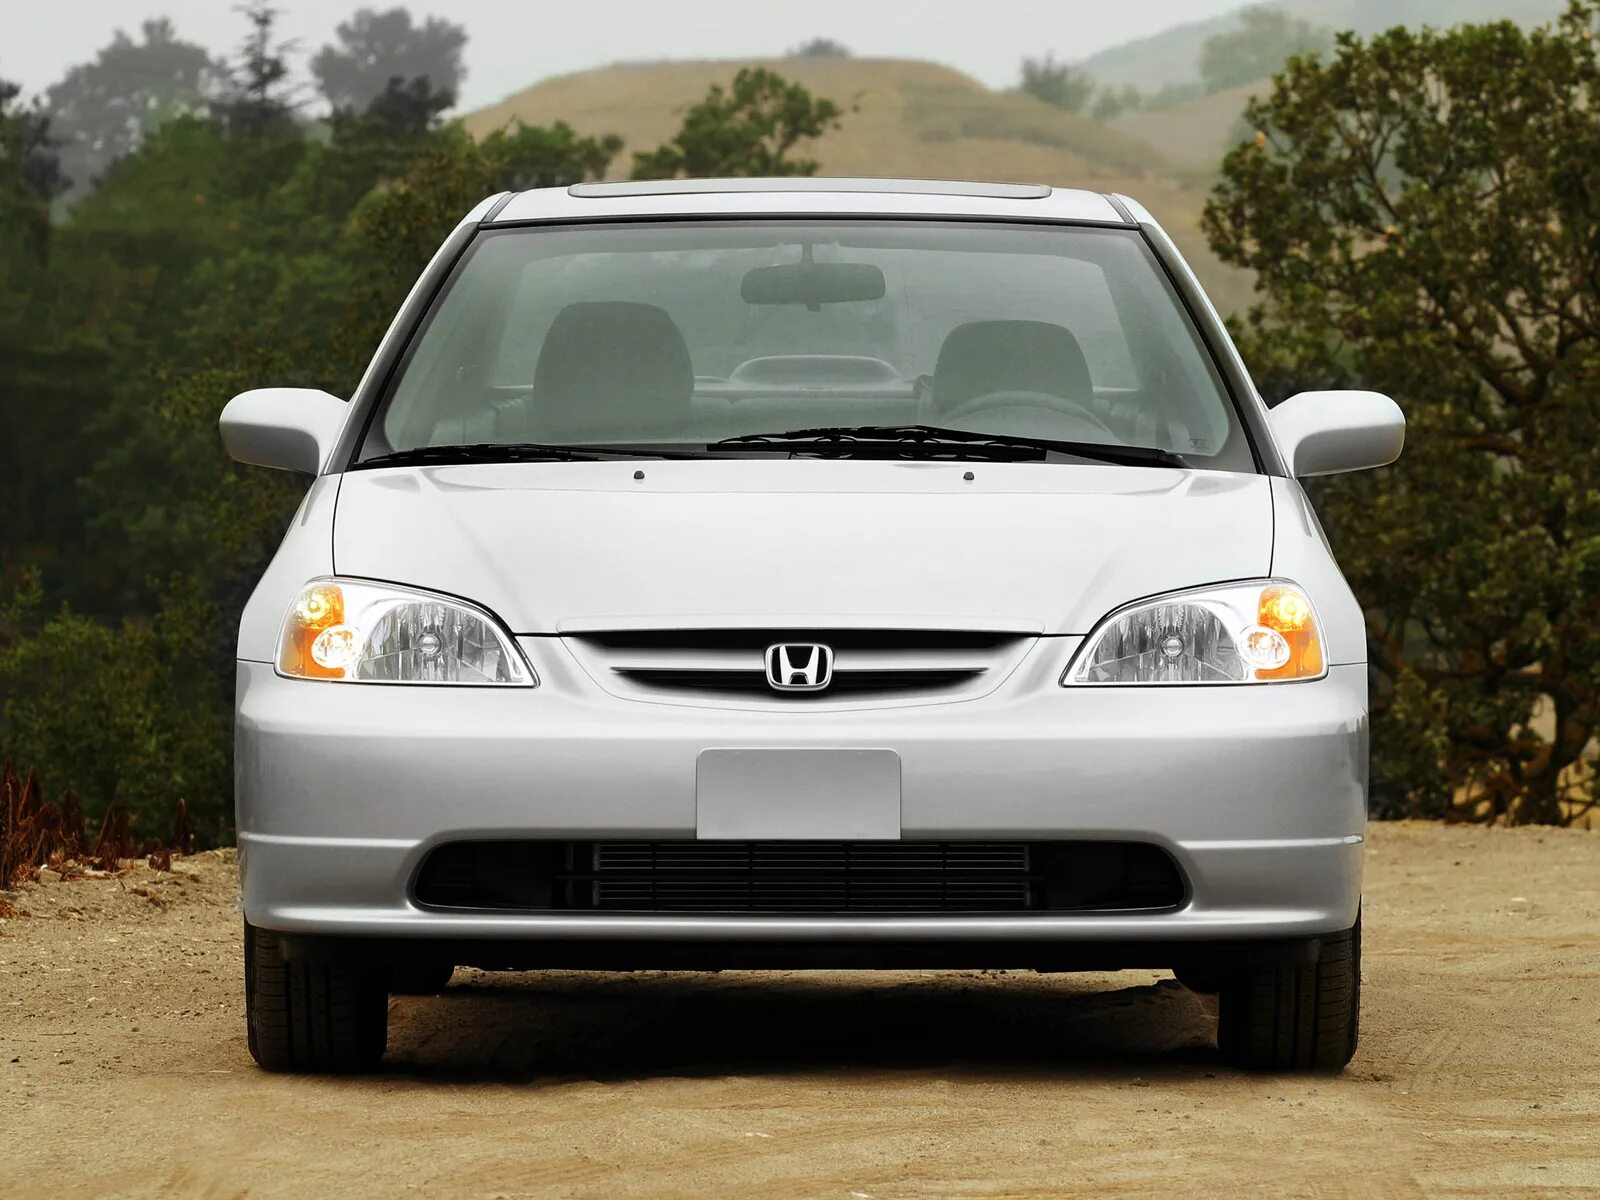 Honda Civic 7 2001. Хонда Цивик 7. Honda Civic VII 2000. Honda Civic 2001-2003. Цивик 7 поколение хэтчбек